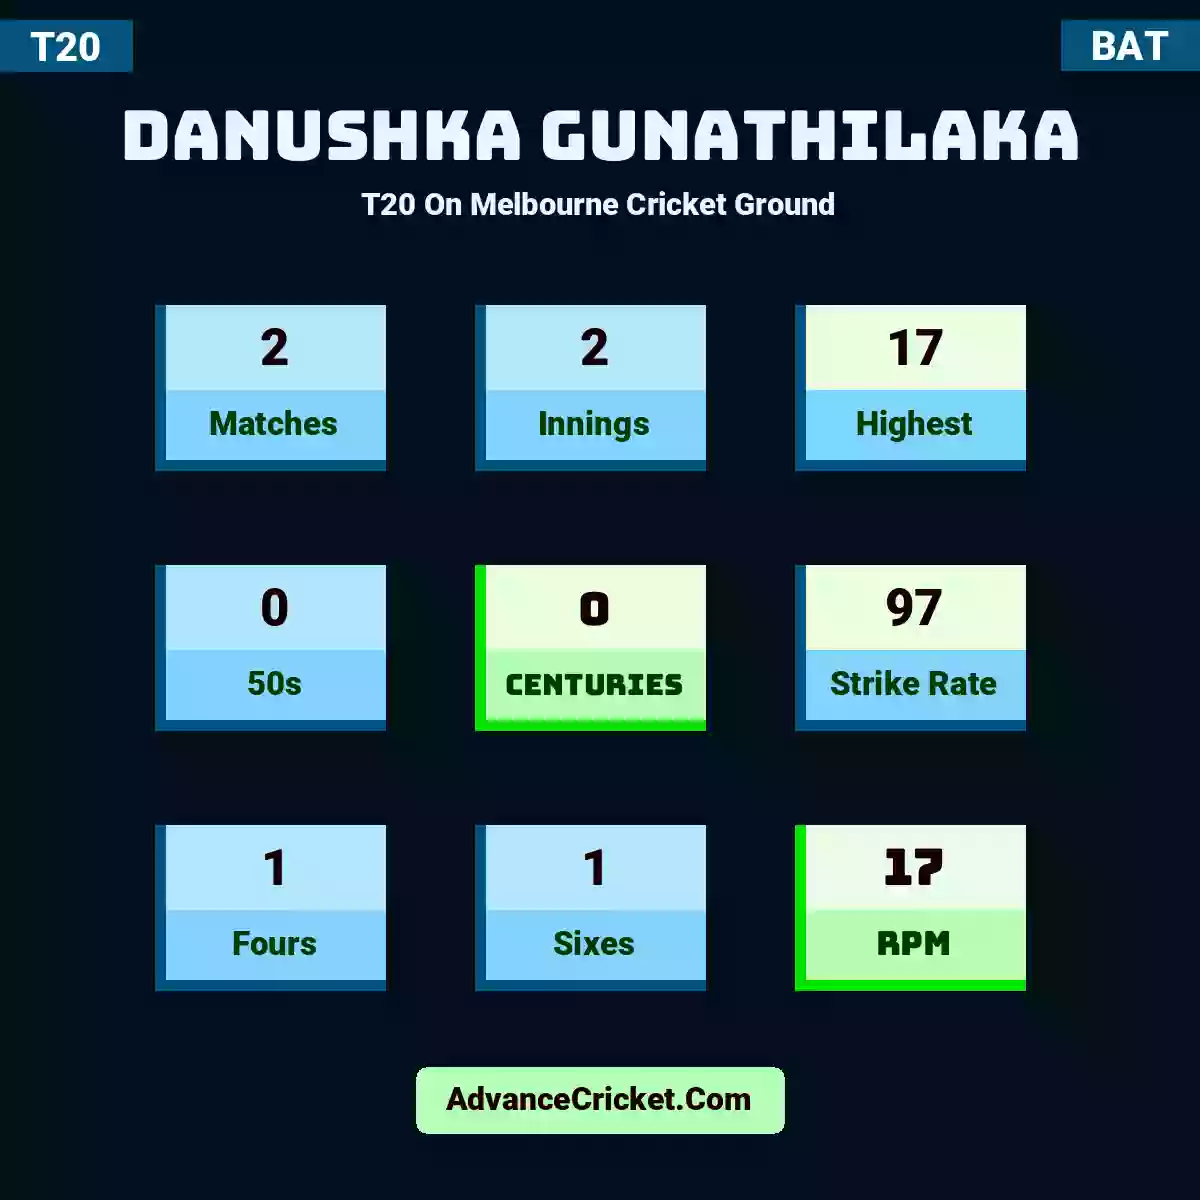 Danushka Gunathilaka T20  On Melbourne Cricket Ground, Danushka Gunathilaka played 2 matches, scored 17 runs as highest, 0 half-centuries, and 0 centuries, with a strike rate of 97. D.Gunathilaka hit 1 fours and 1 sixes, with an RPM of 17.